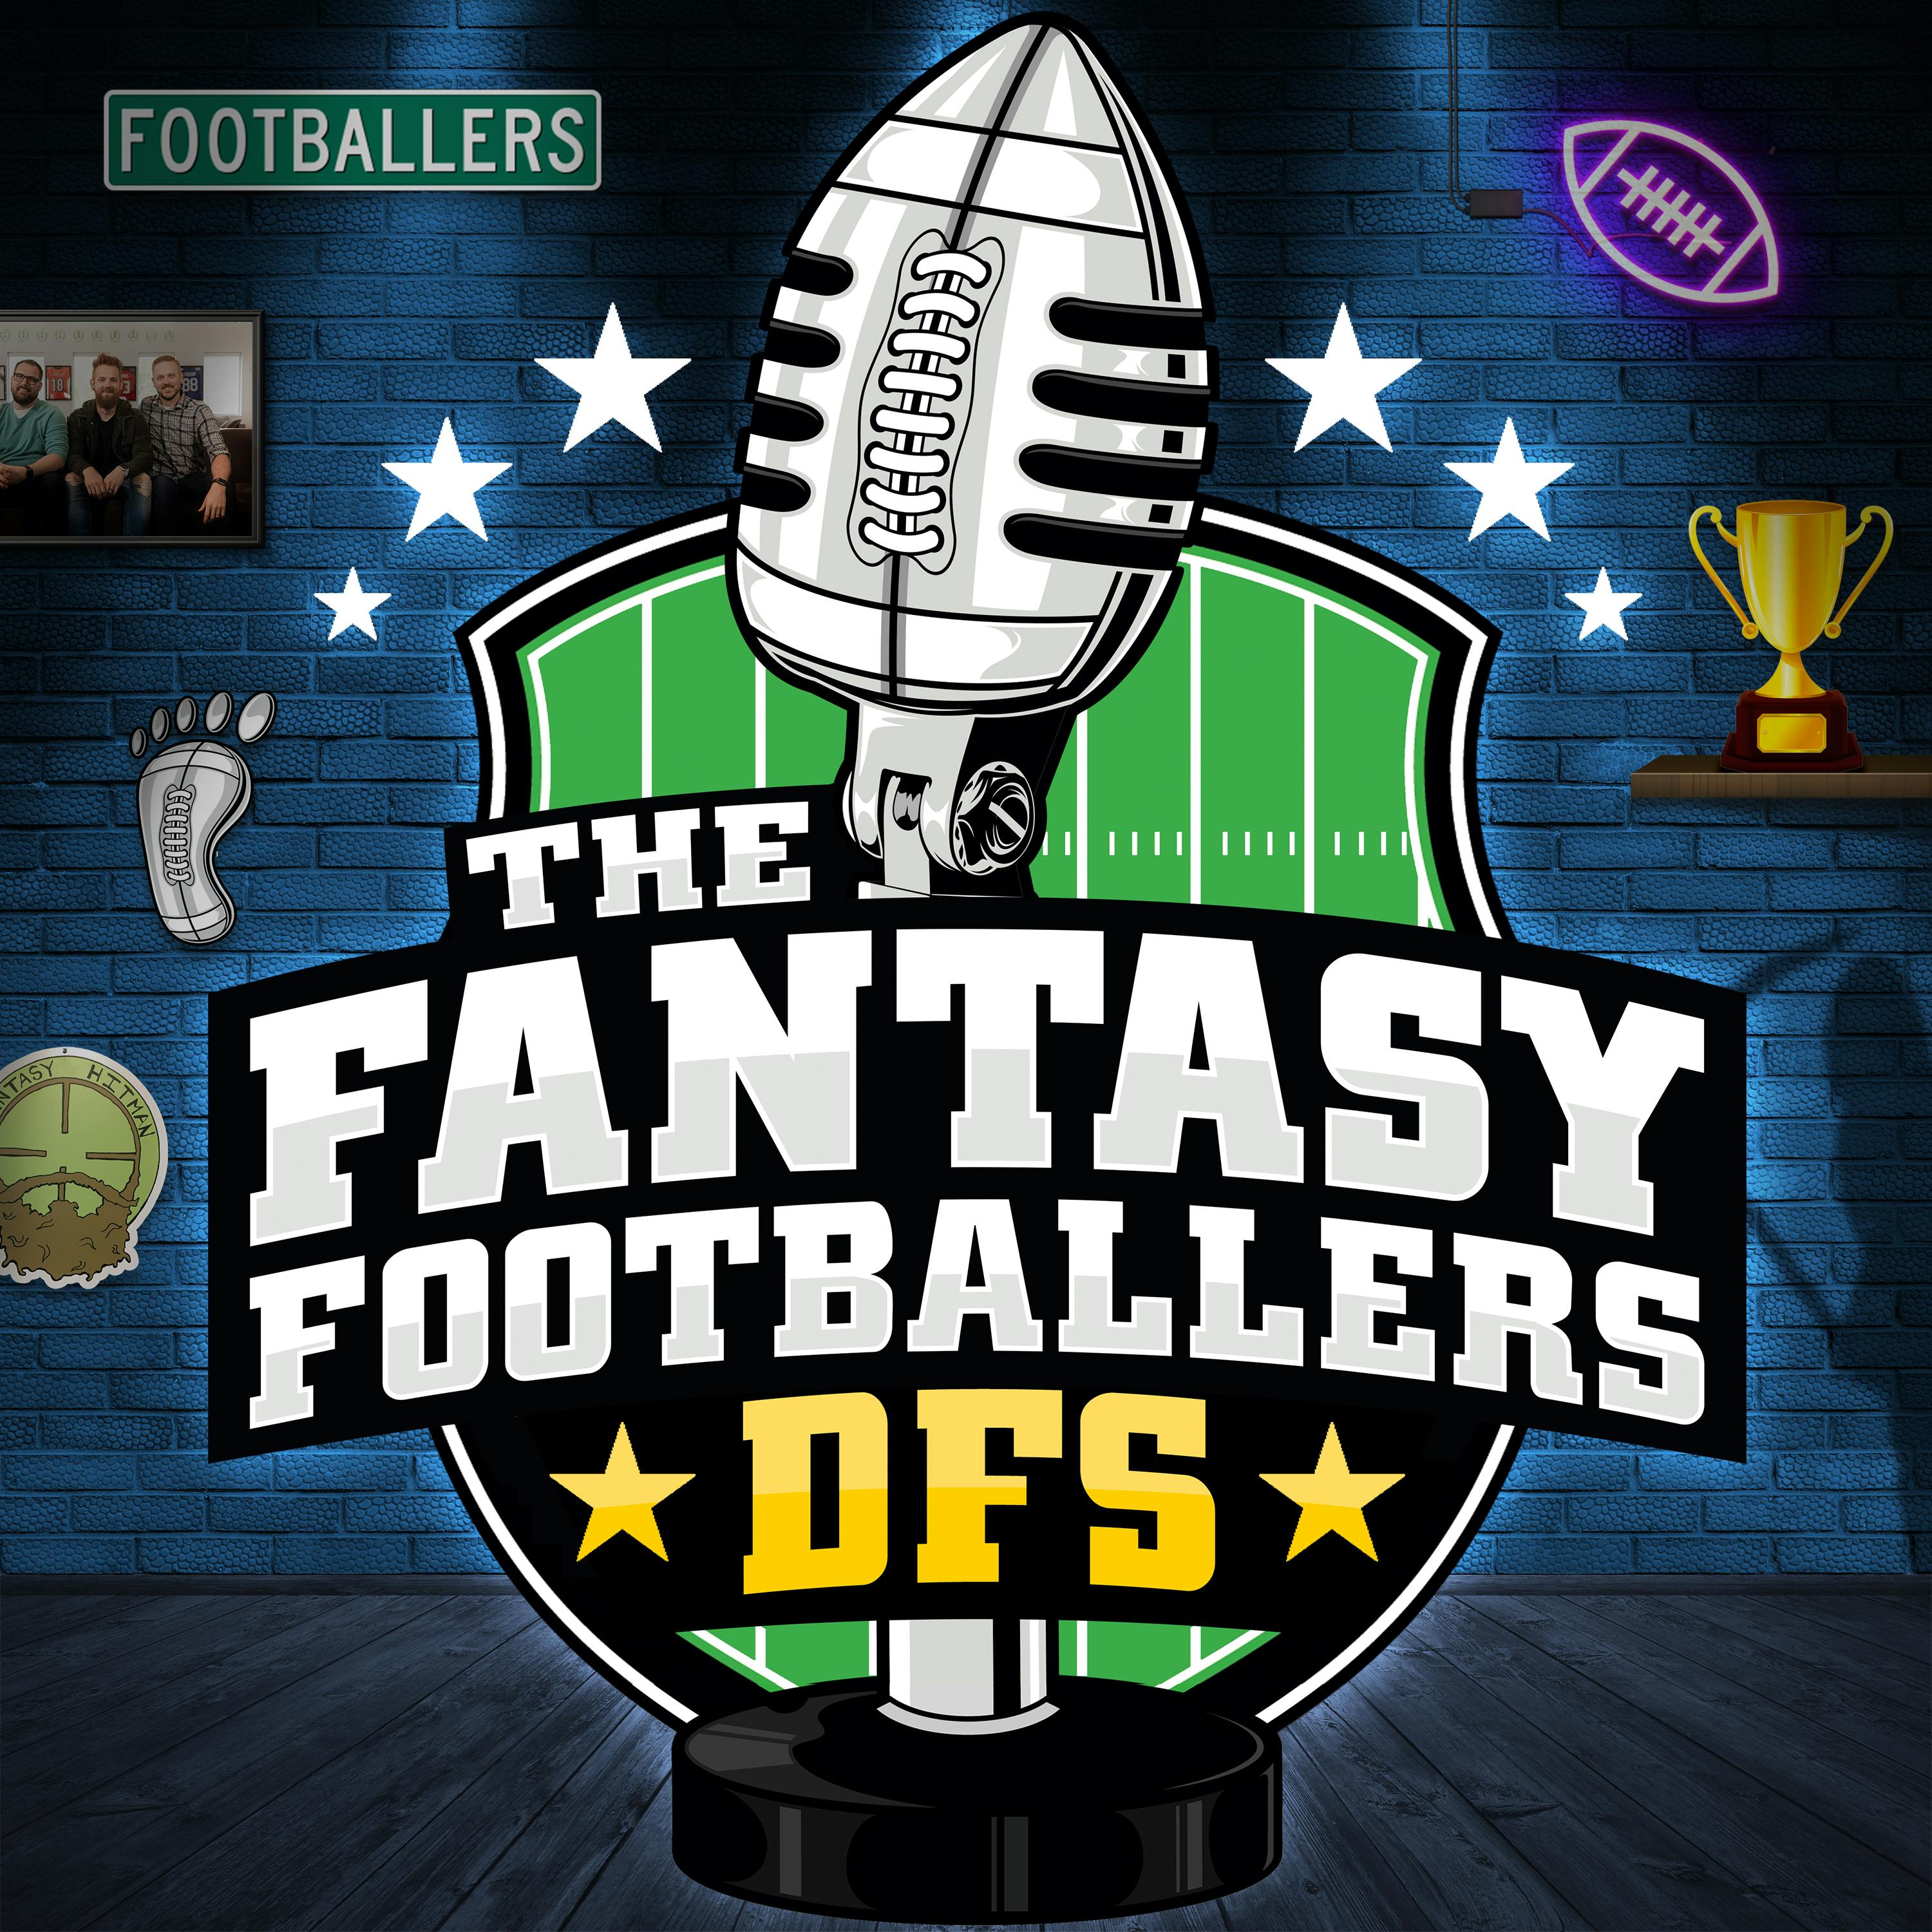 Week 5 DFS Podcast - Fantasy Football DFS